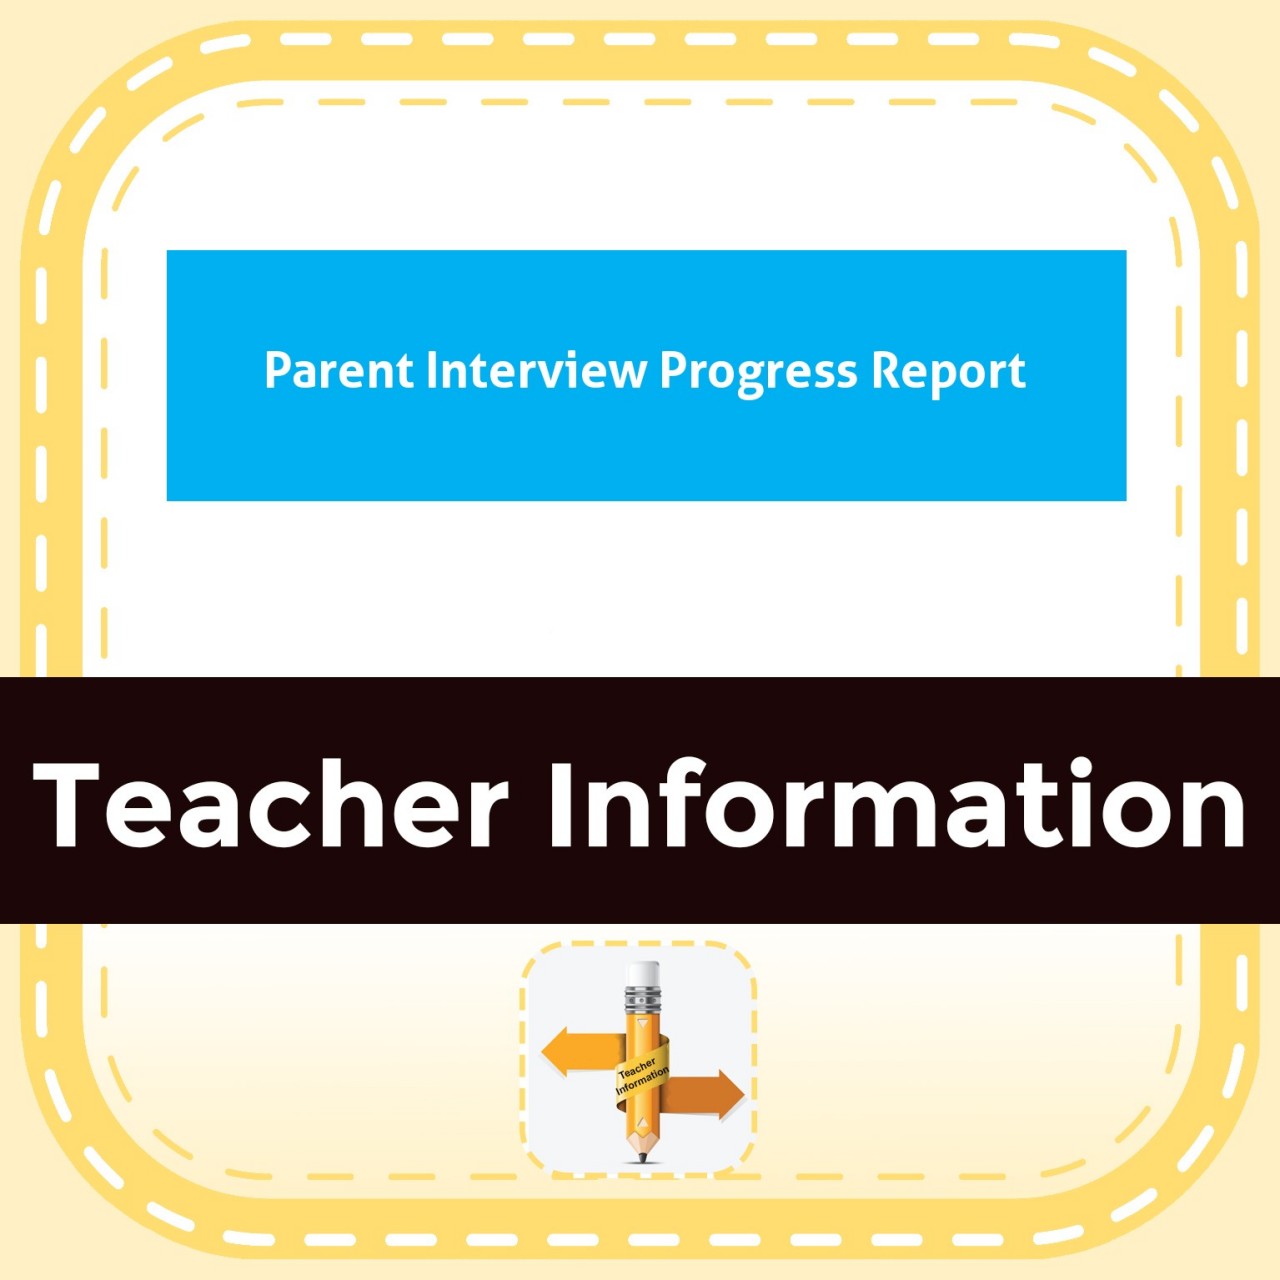 Parent Interview Progress Report